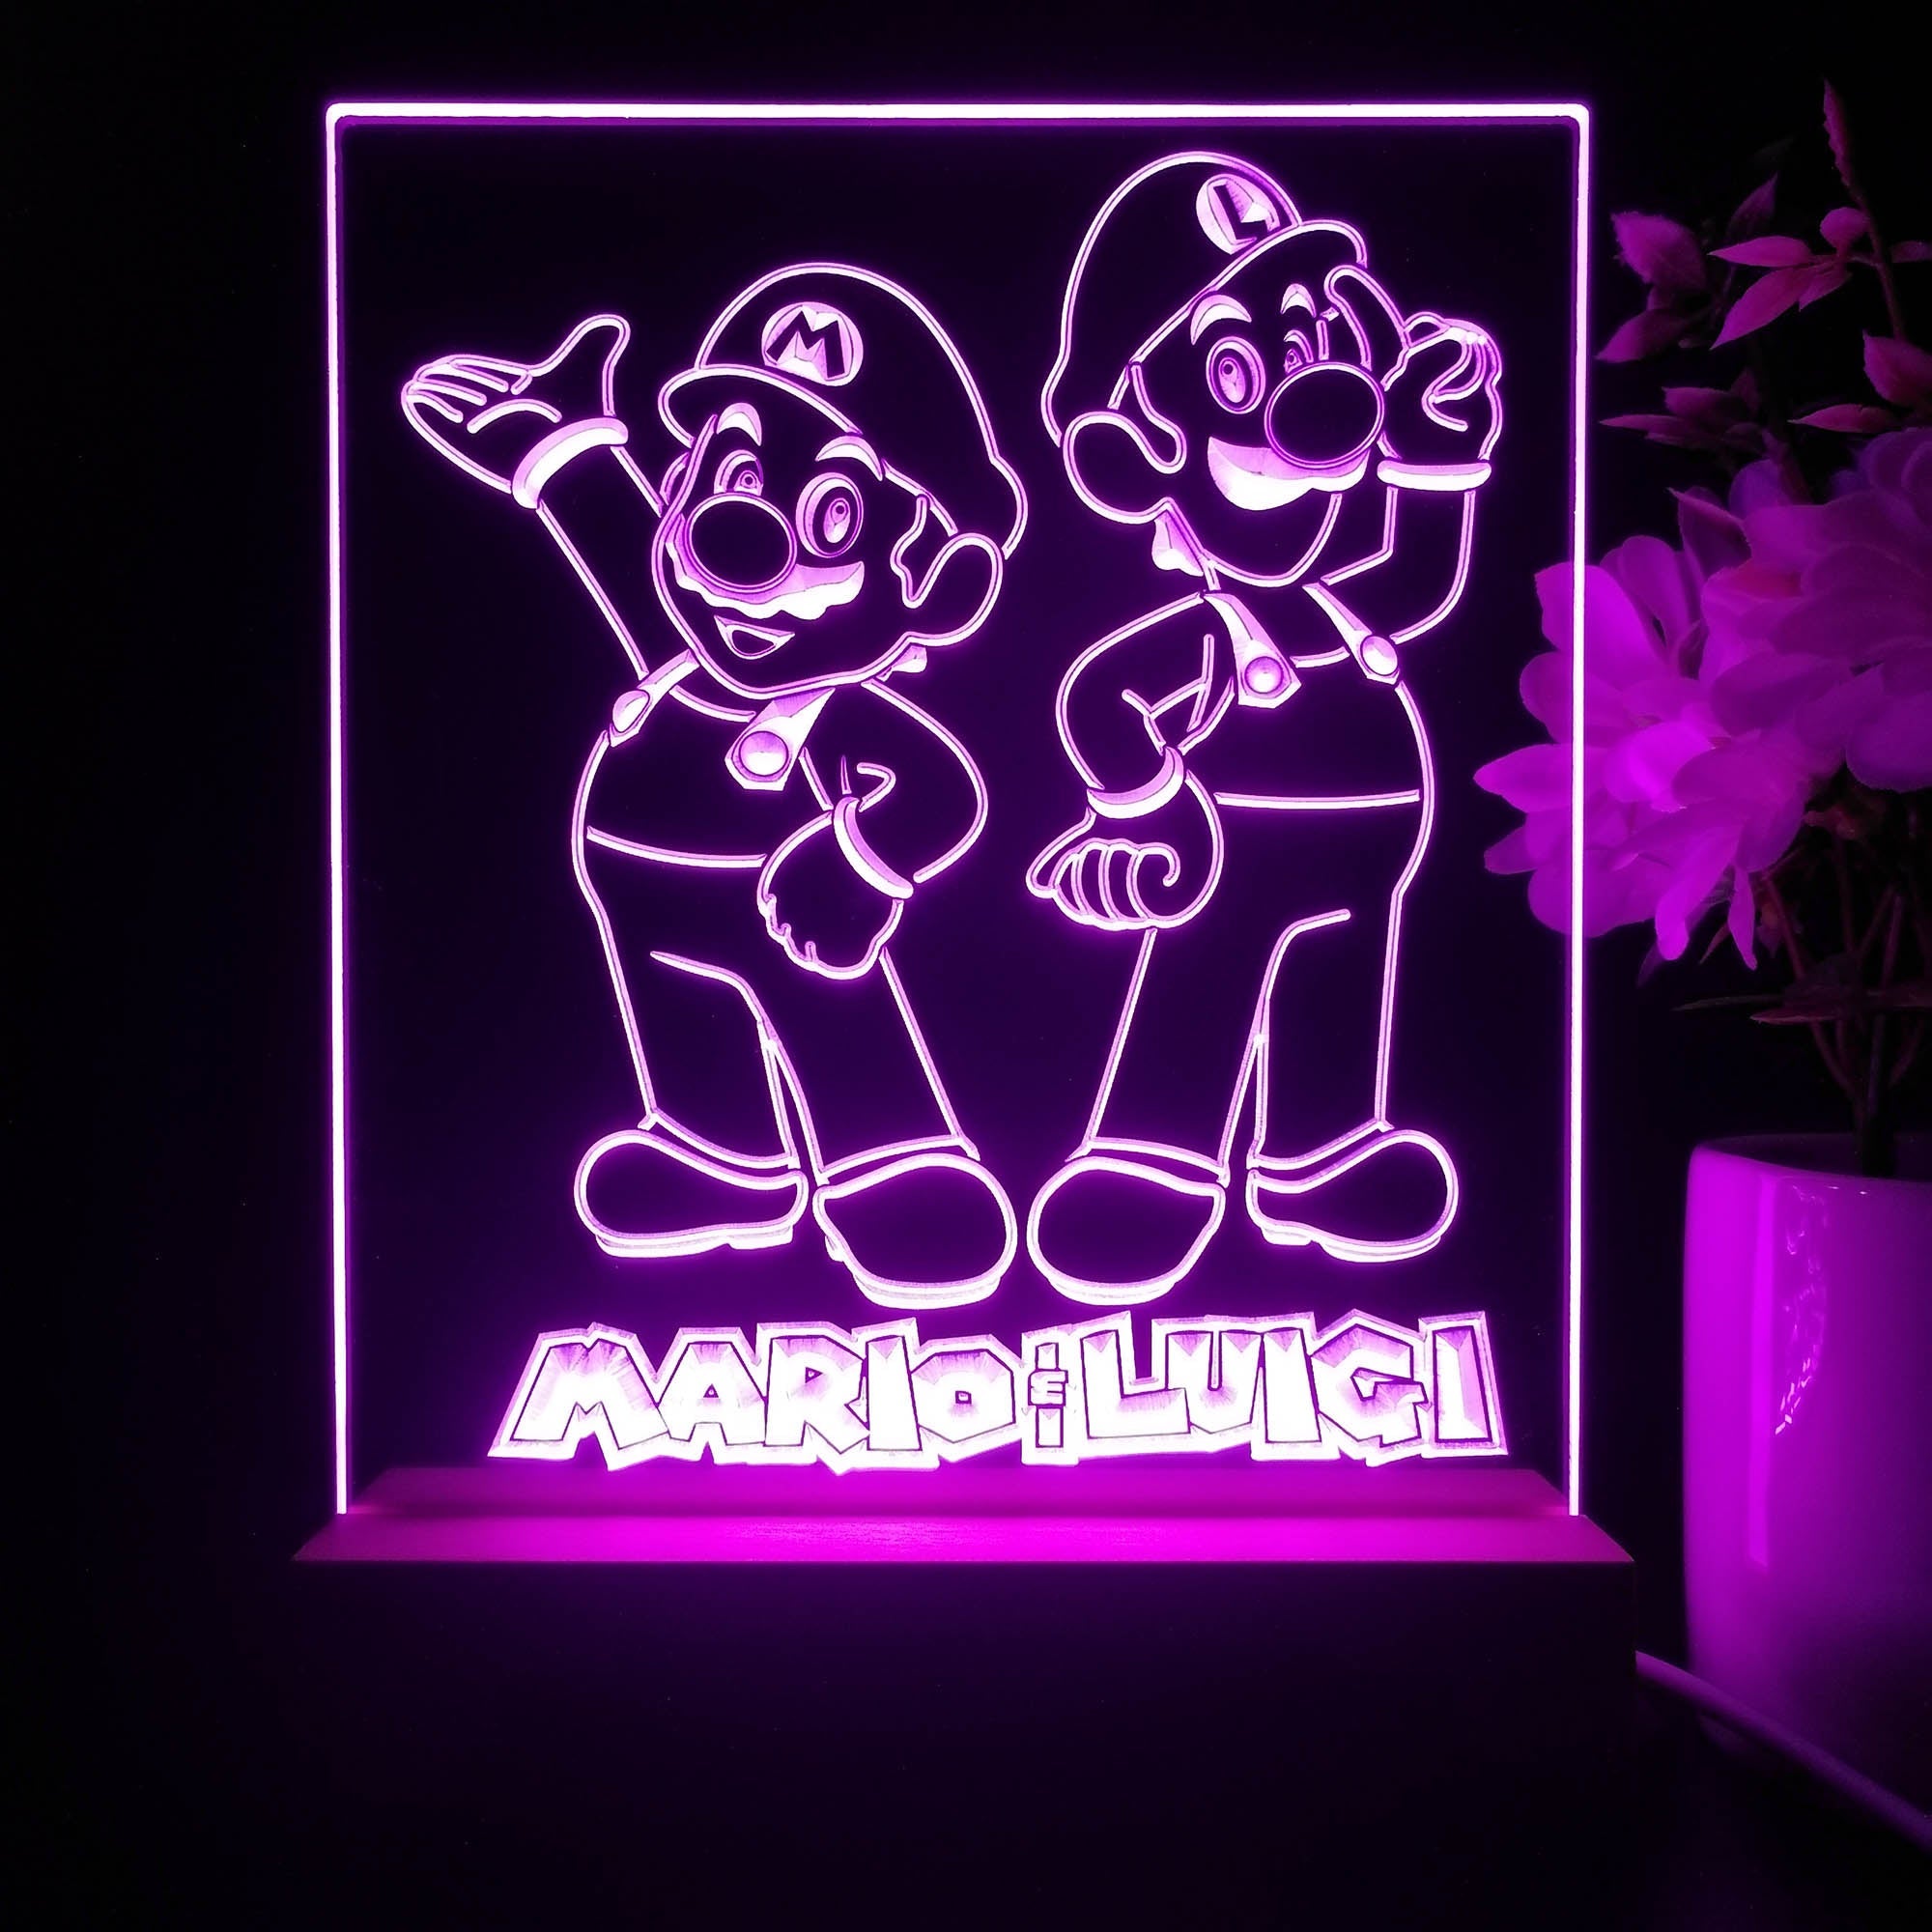 Super Mario Luigi Game Room LED Sign Lamp Display